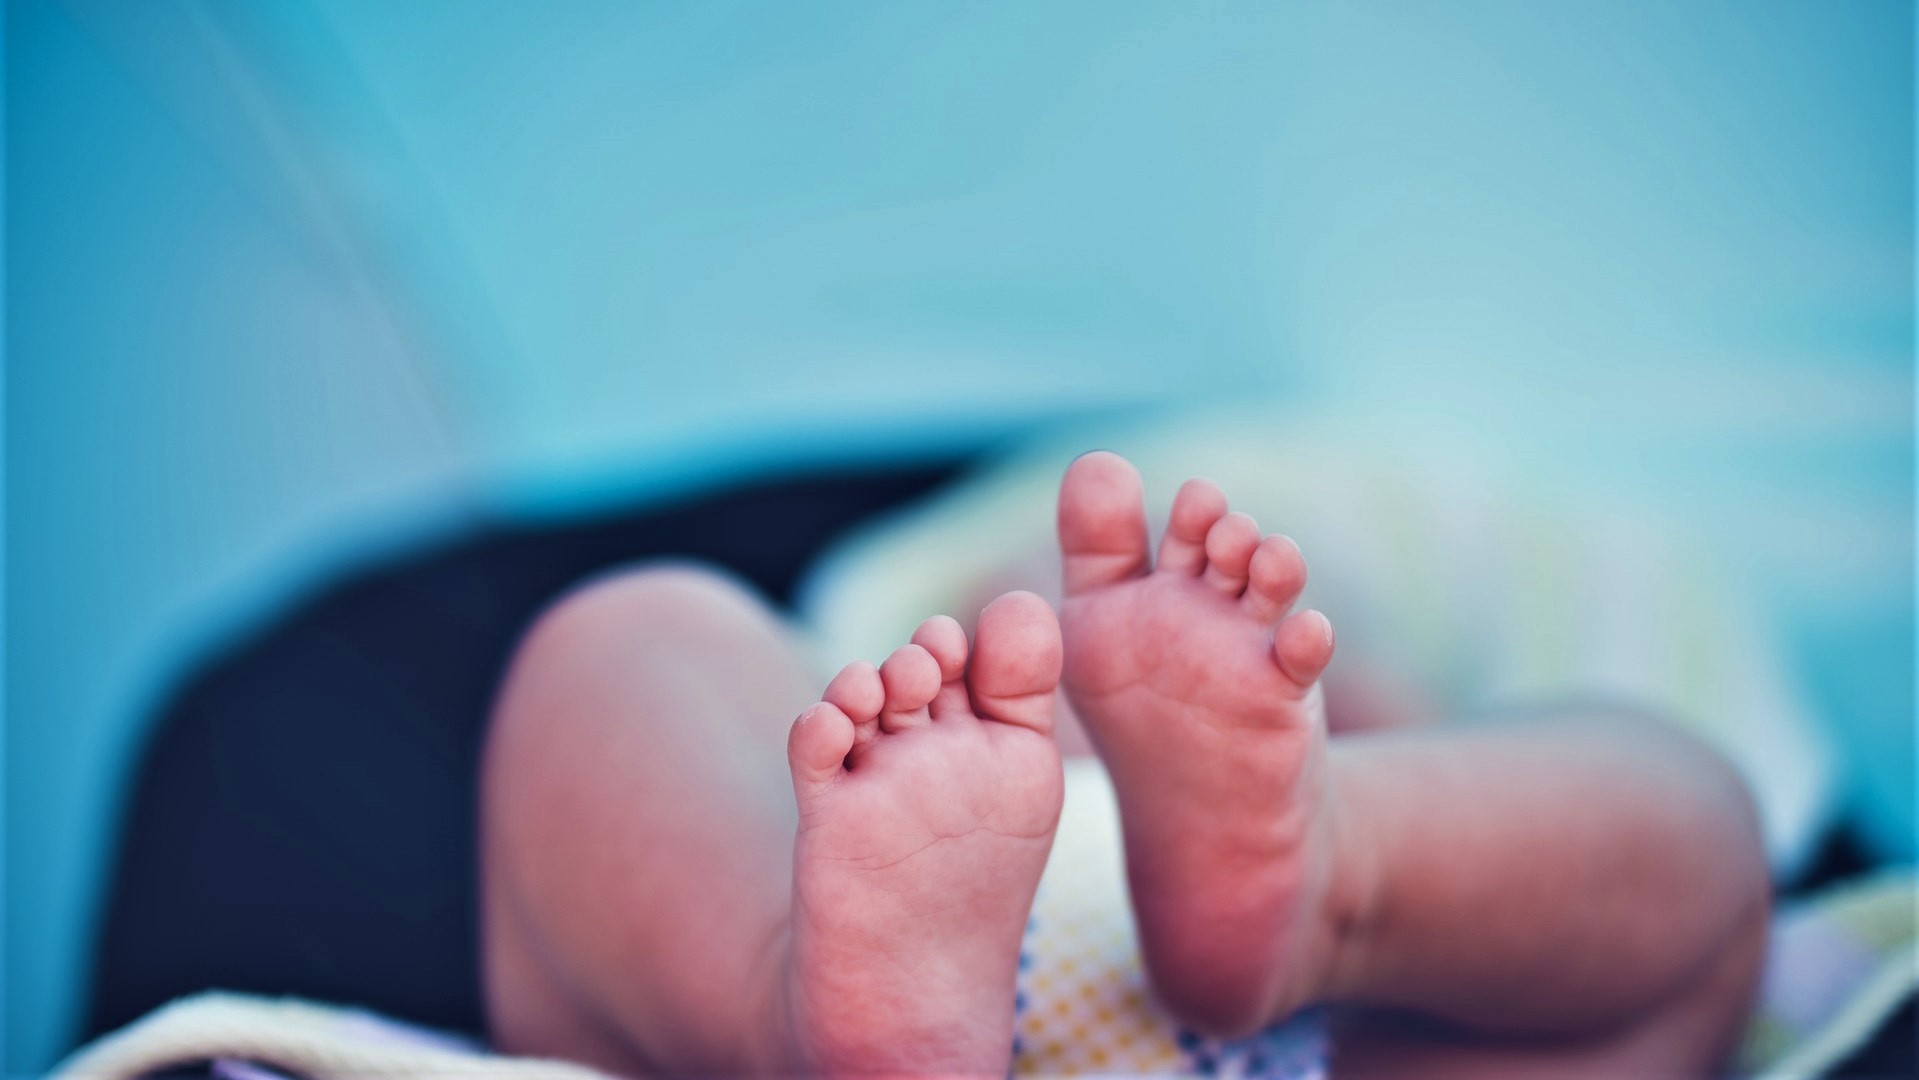 Feet and legs of baby sleeping